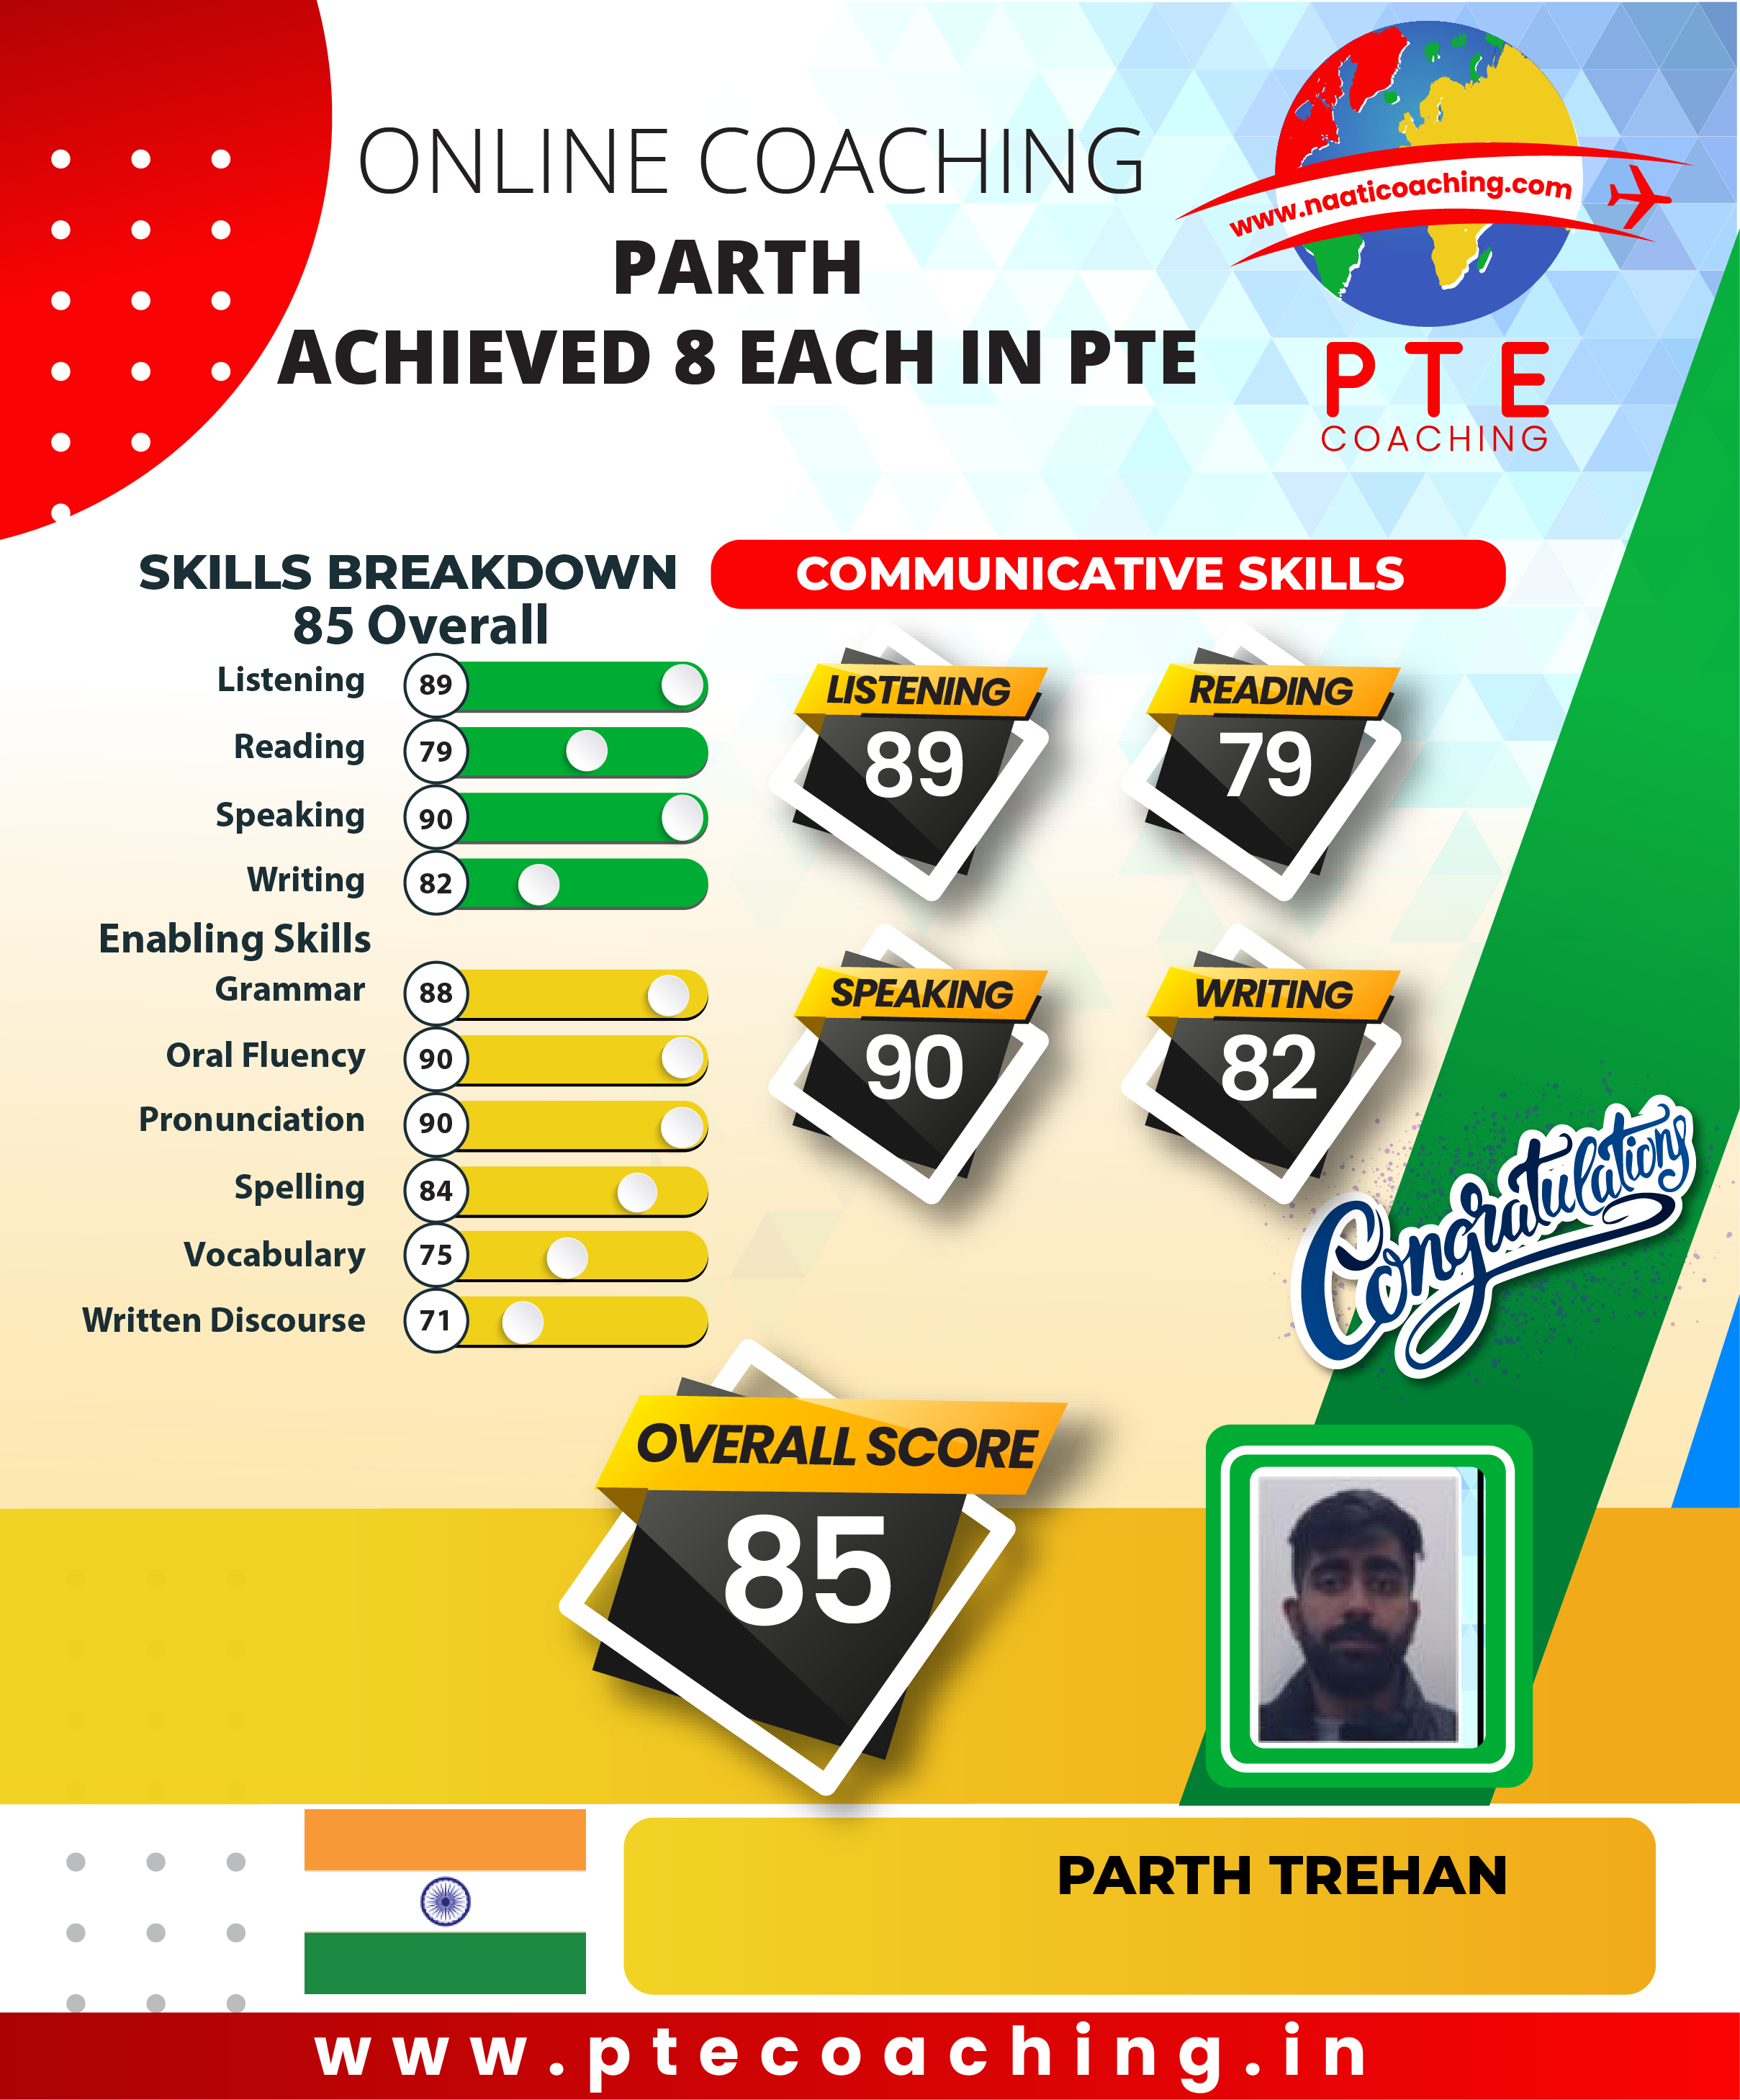 PTE Coaching Scorecard - Parth achieved 8 each in PTE